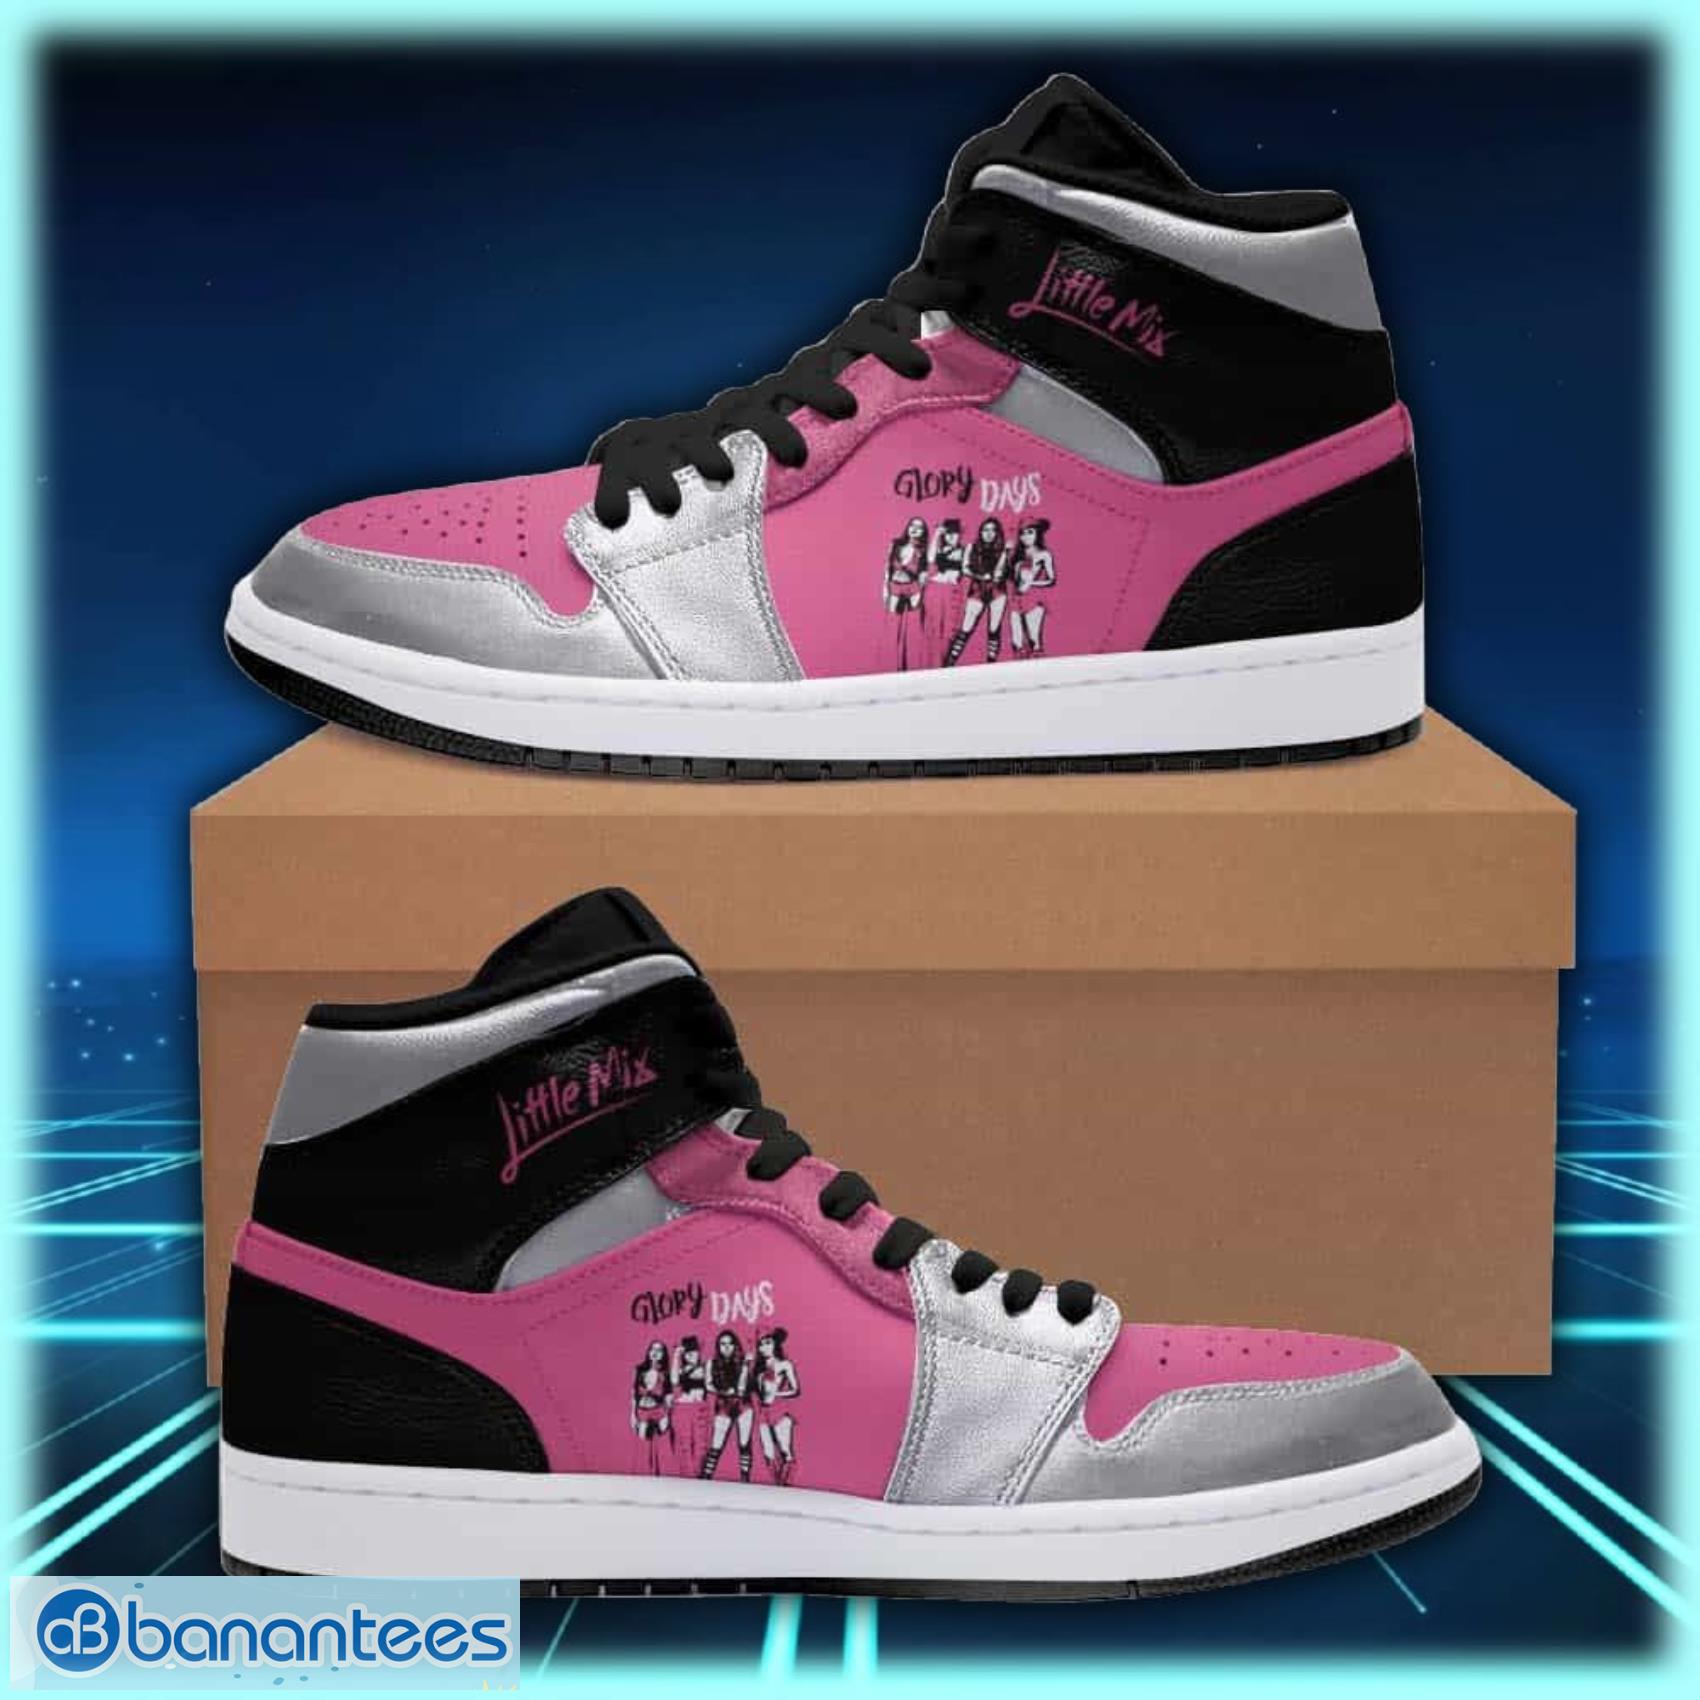 Little Mix 02 Air Jordan Shoes Sport Custom Sneakers Product Photo 1